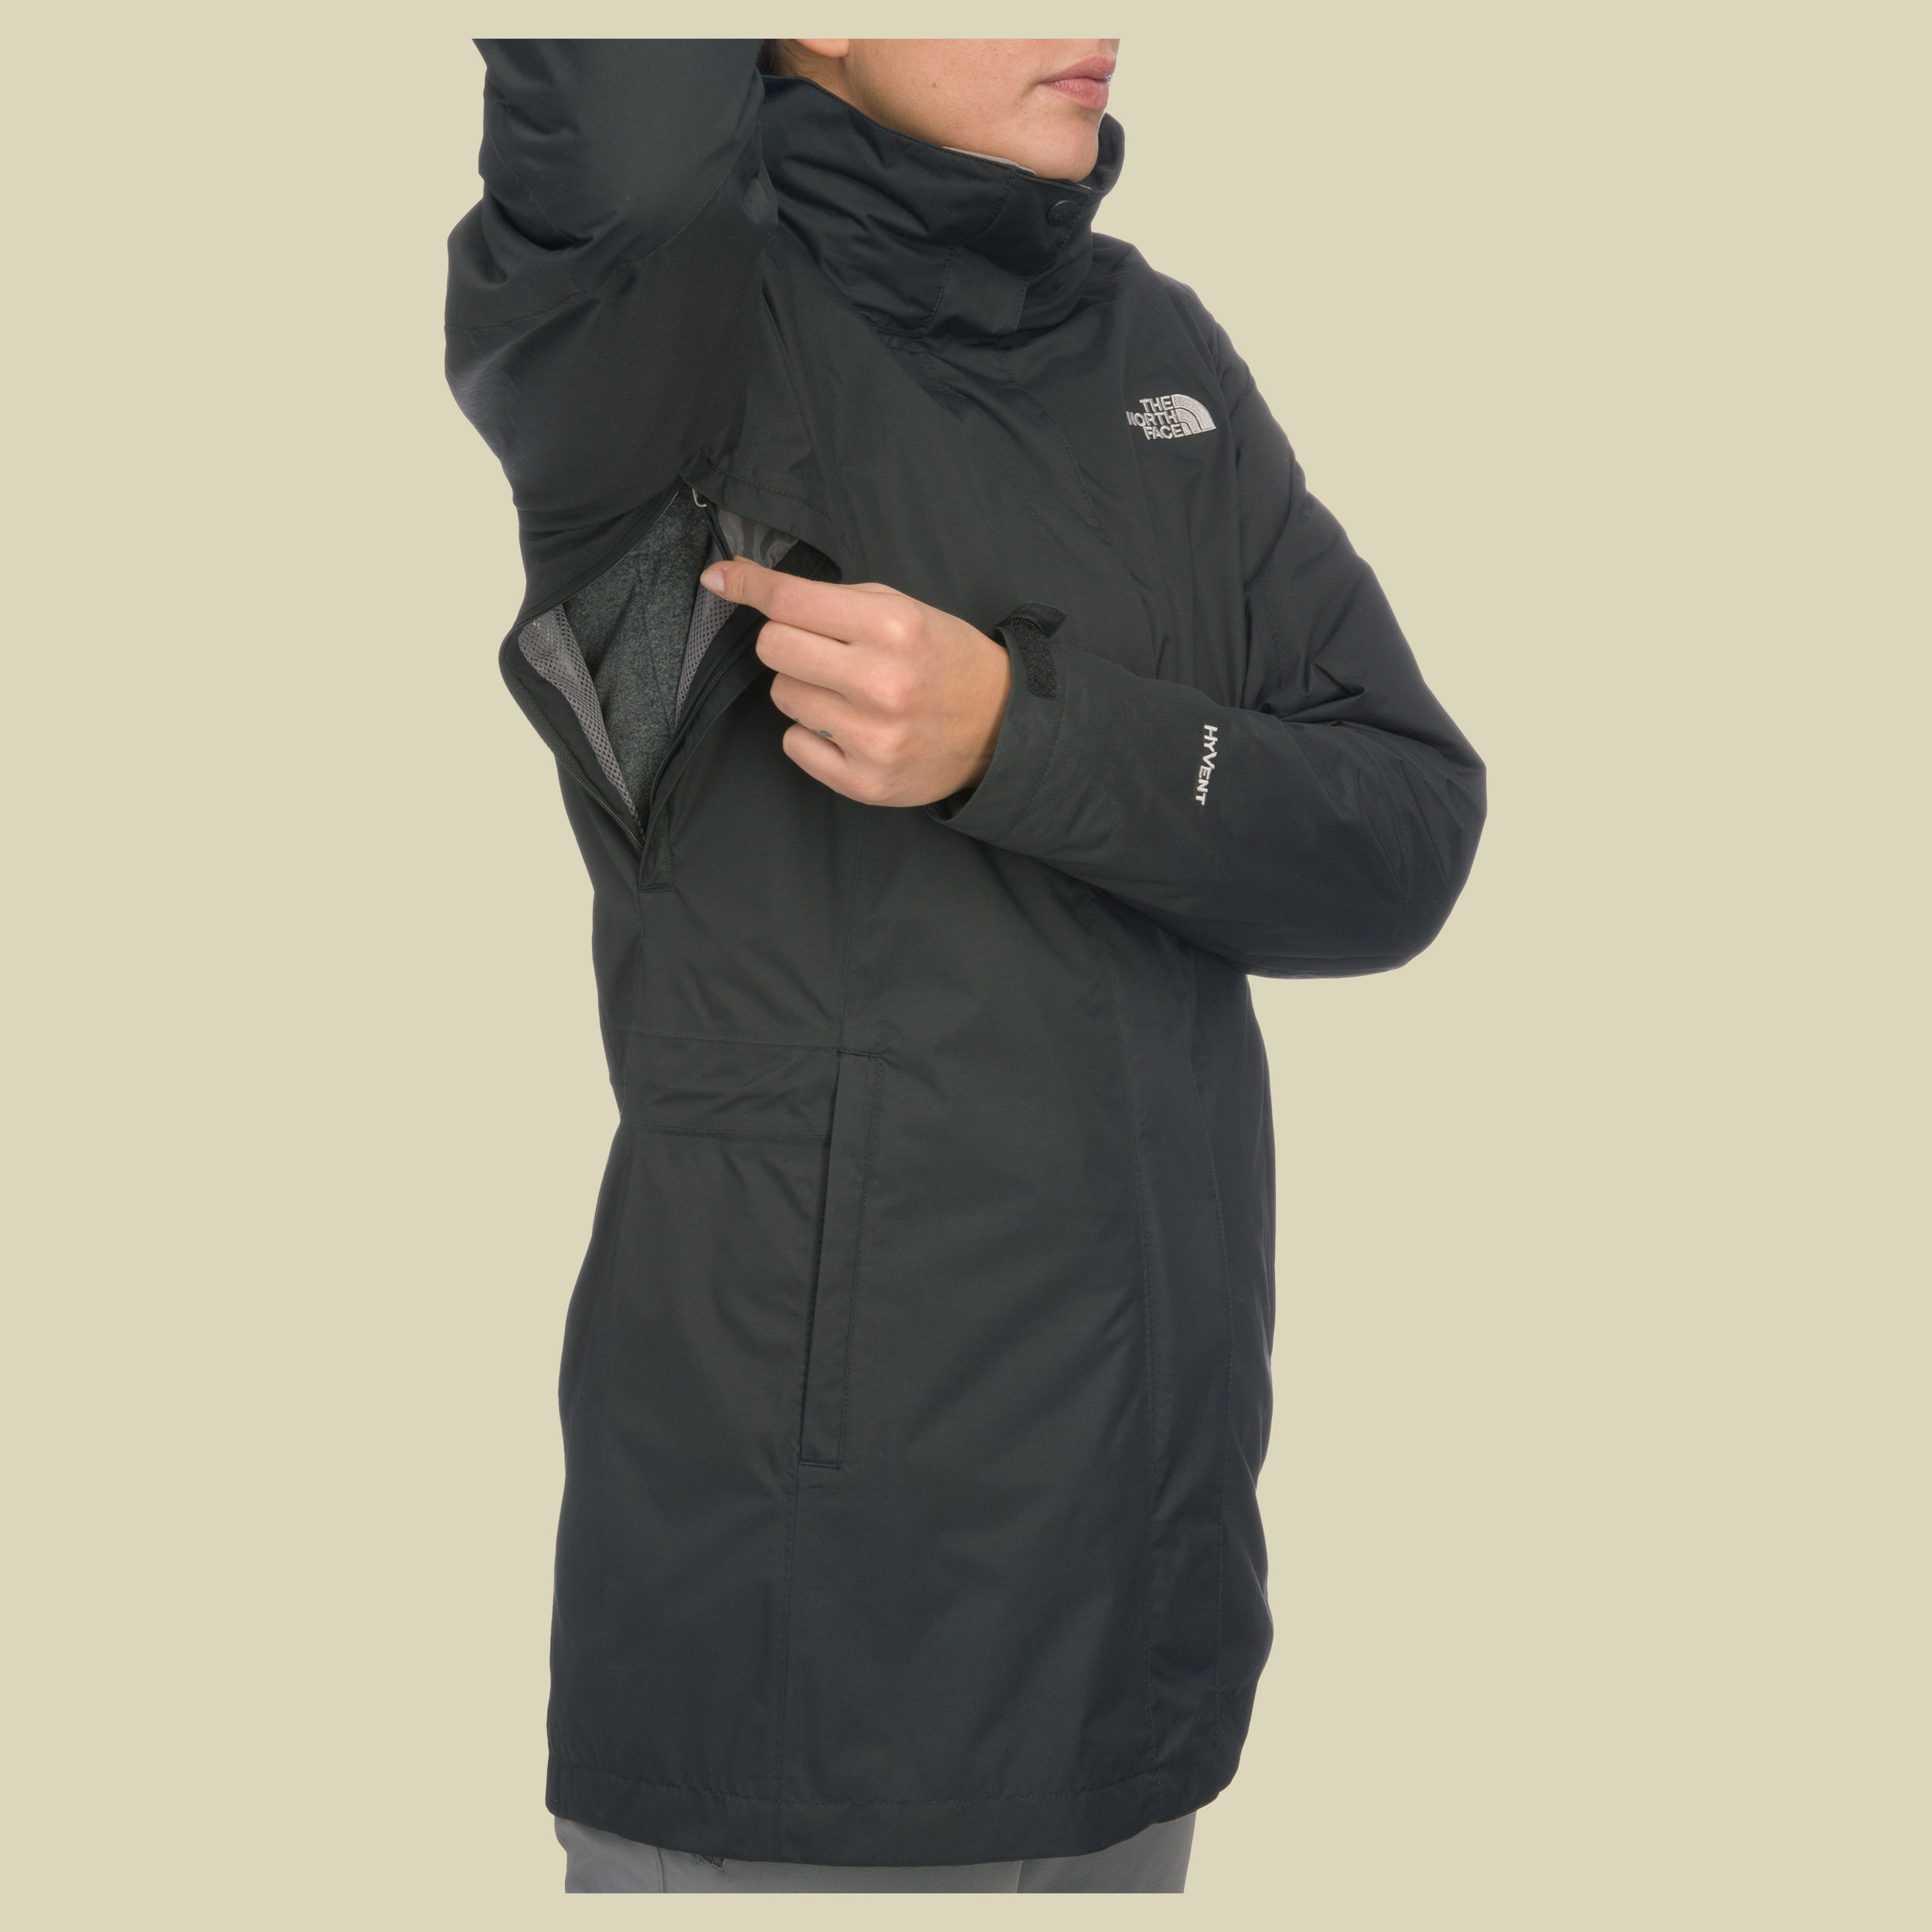 Triton Triclimate Jacket Women Größe S Farbe black